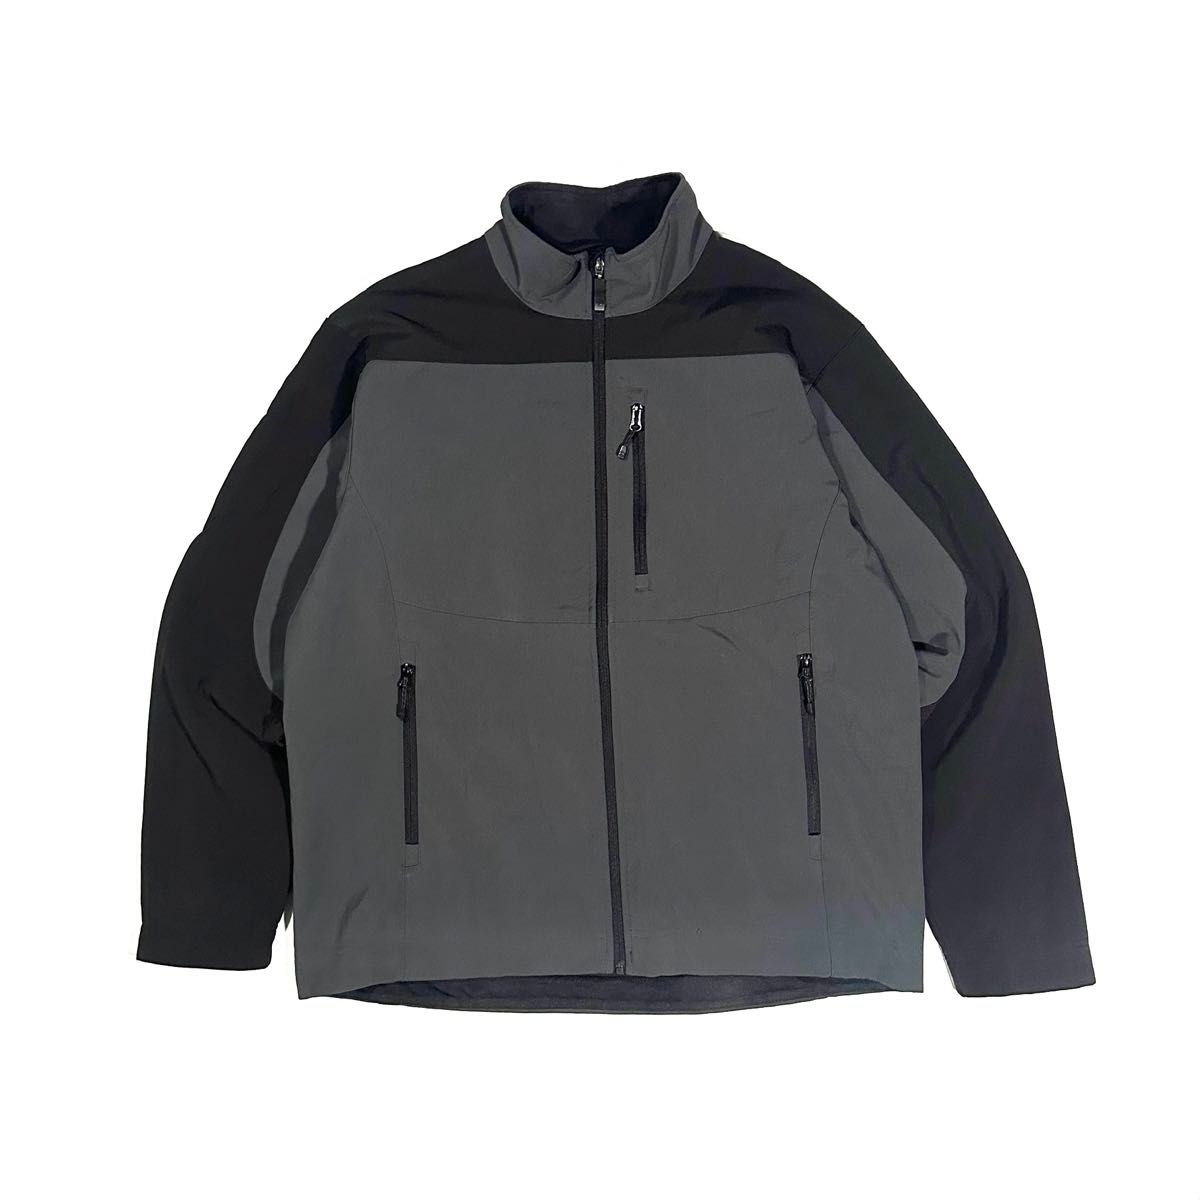 Continental soft shell jacket black grey